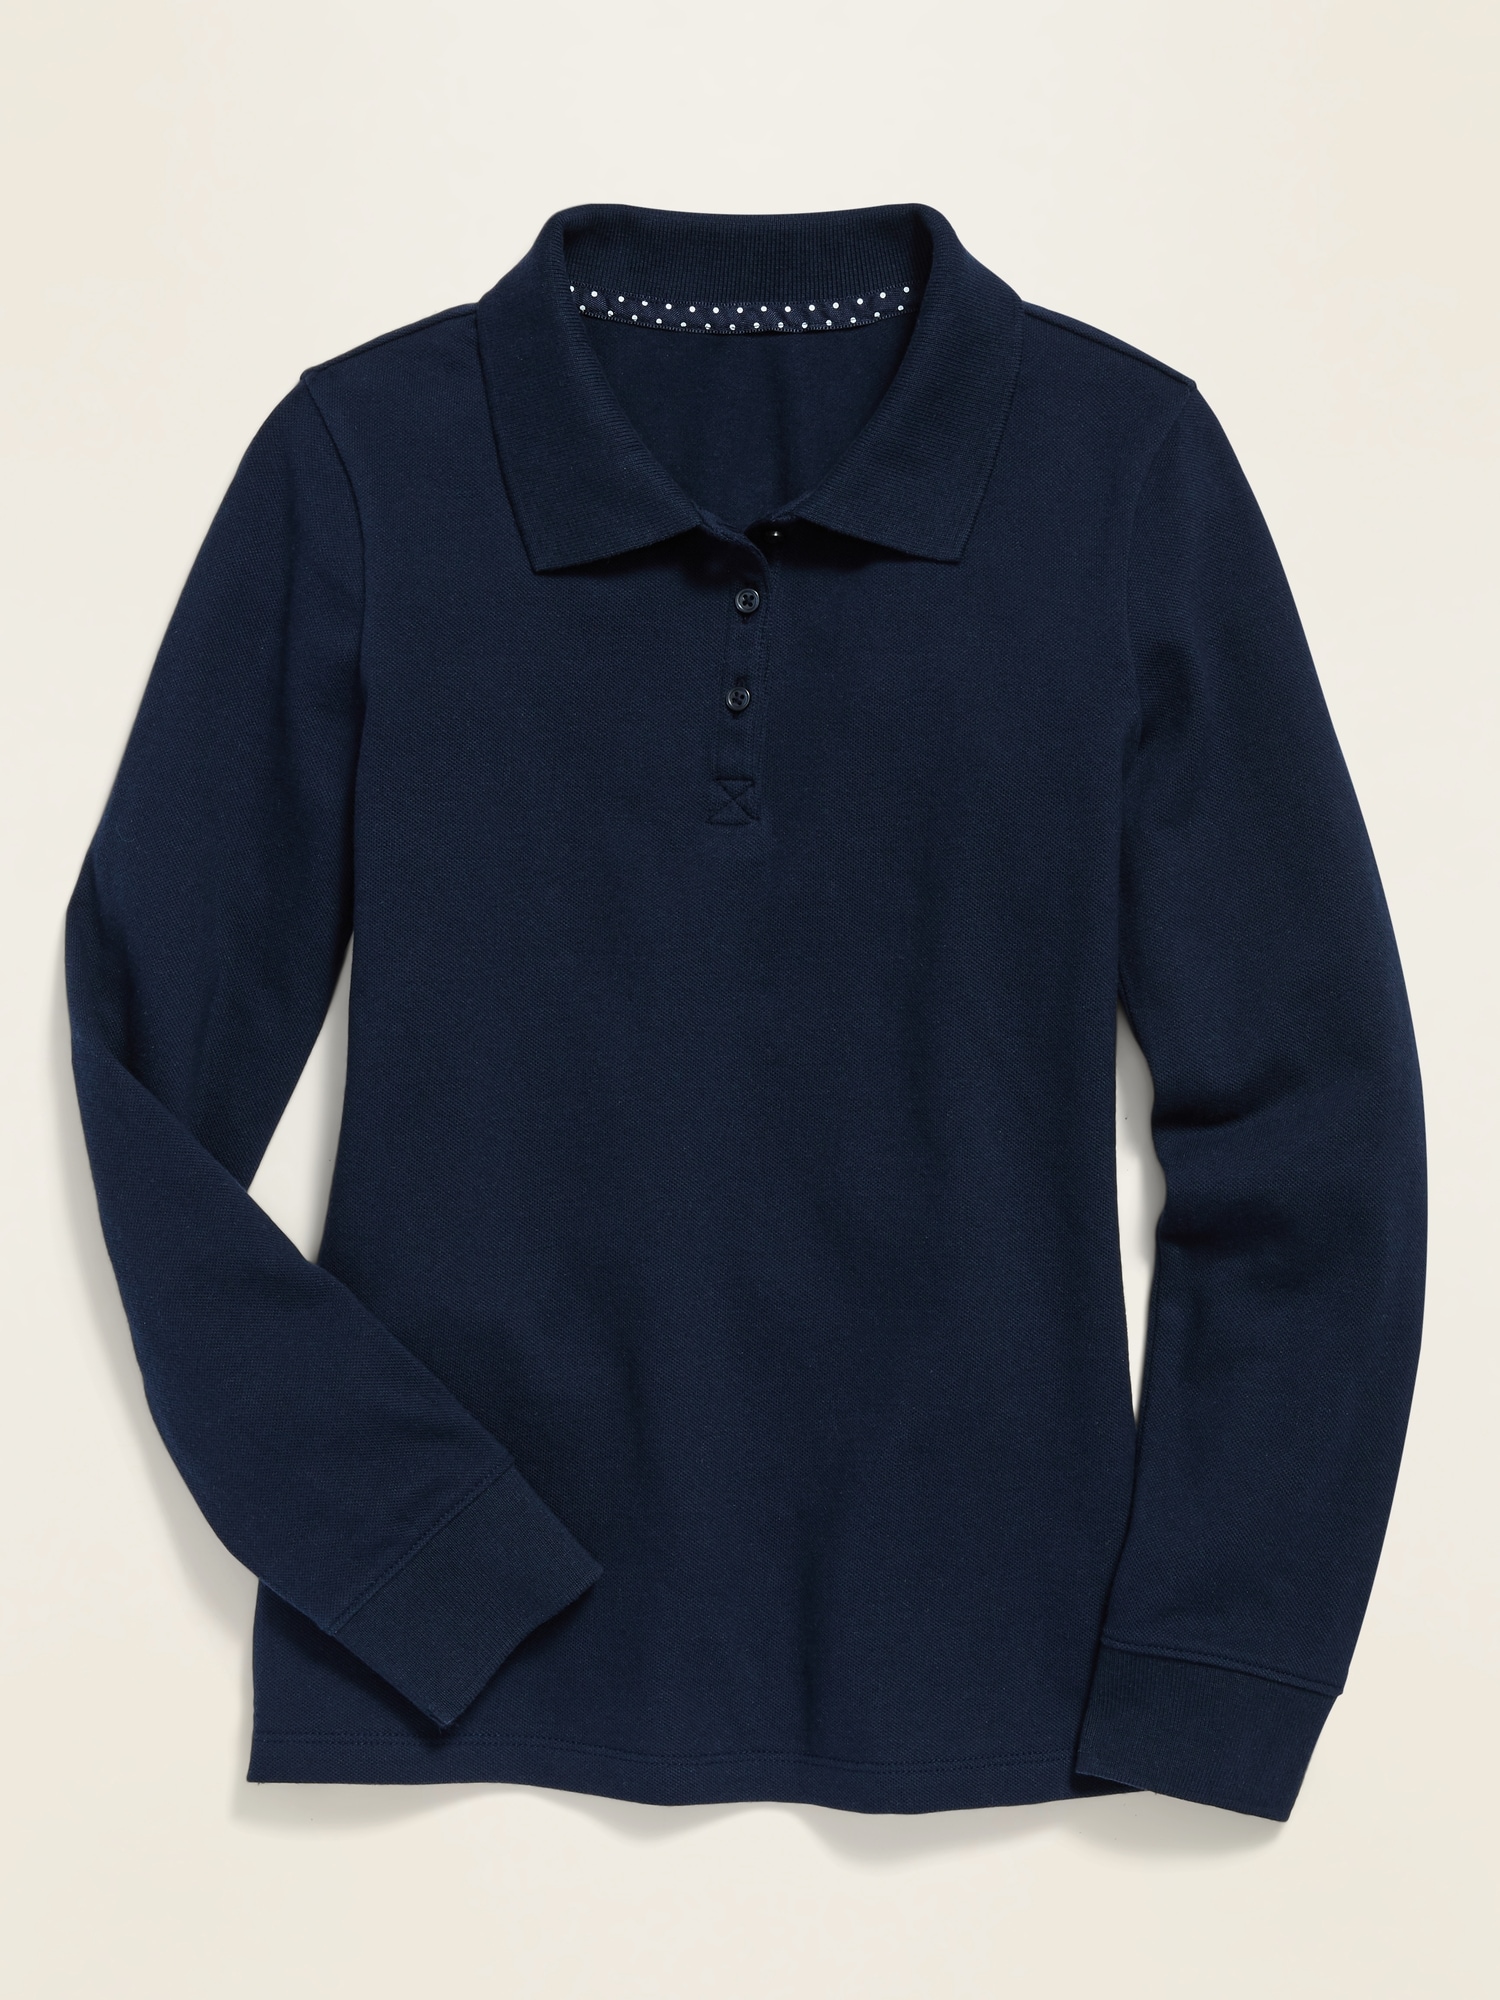 Old Navy Uniform Pique Polo Shirt for Girls blue. 1